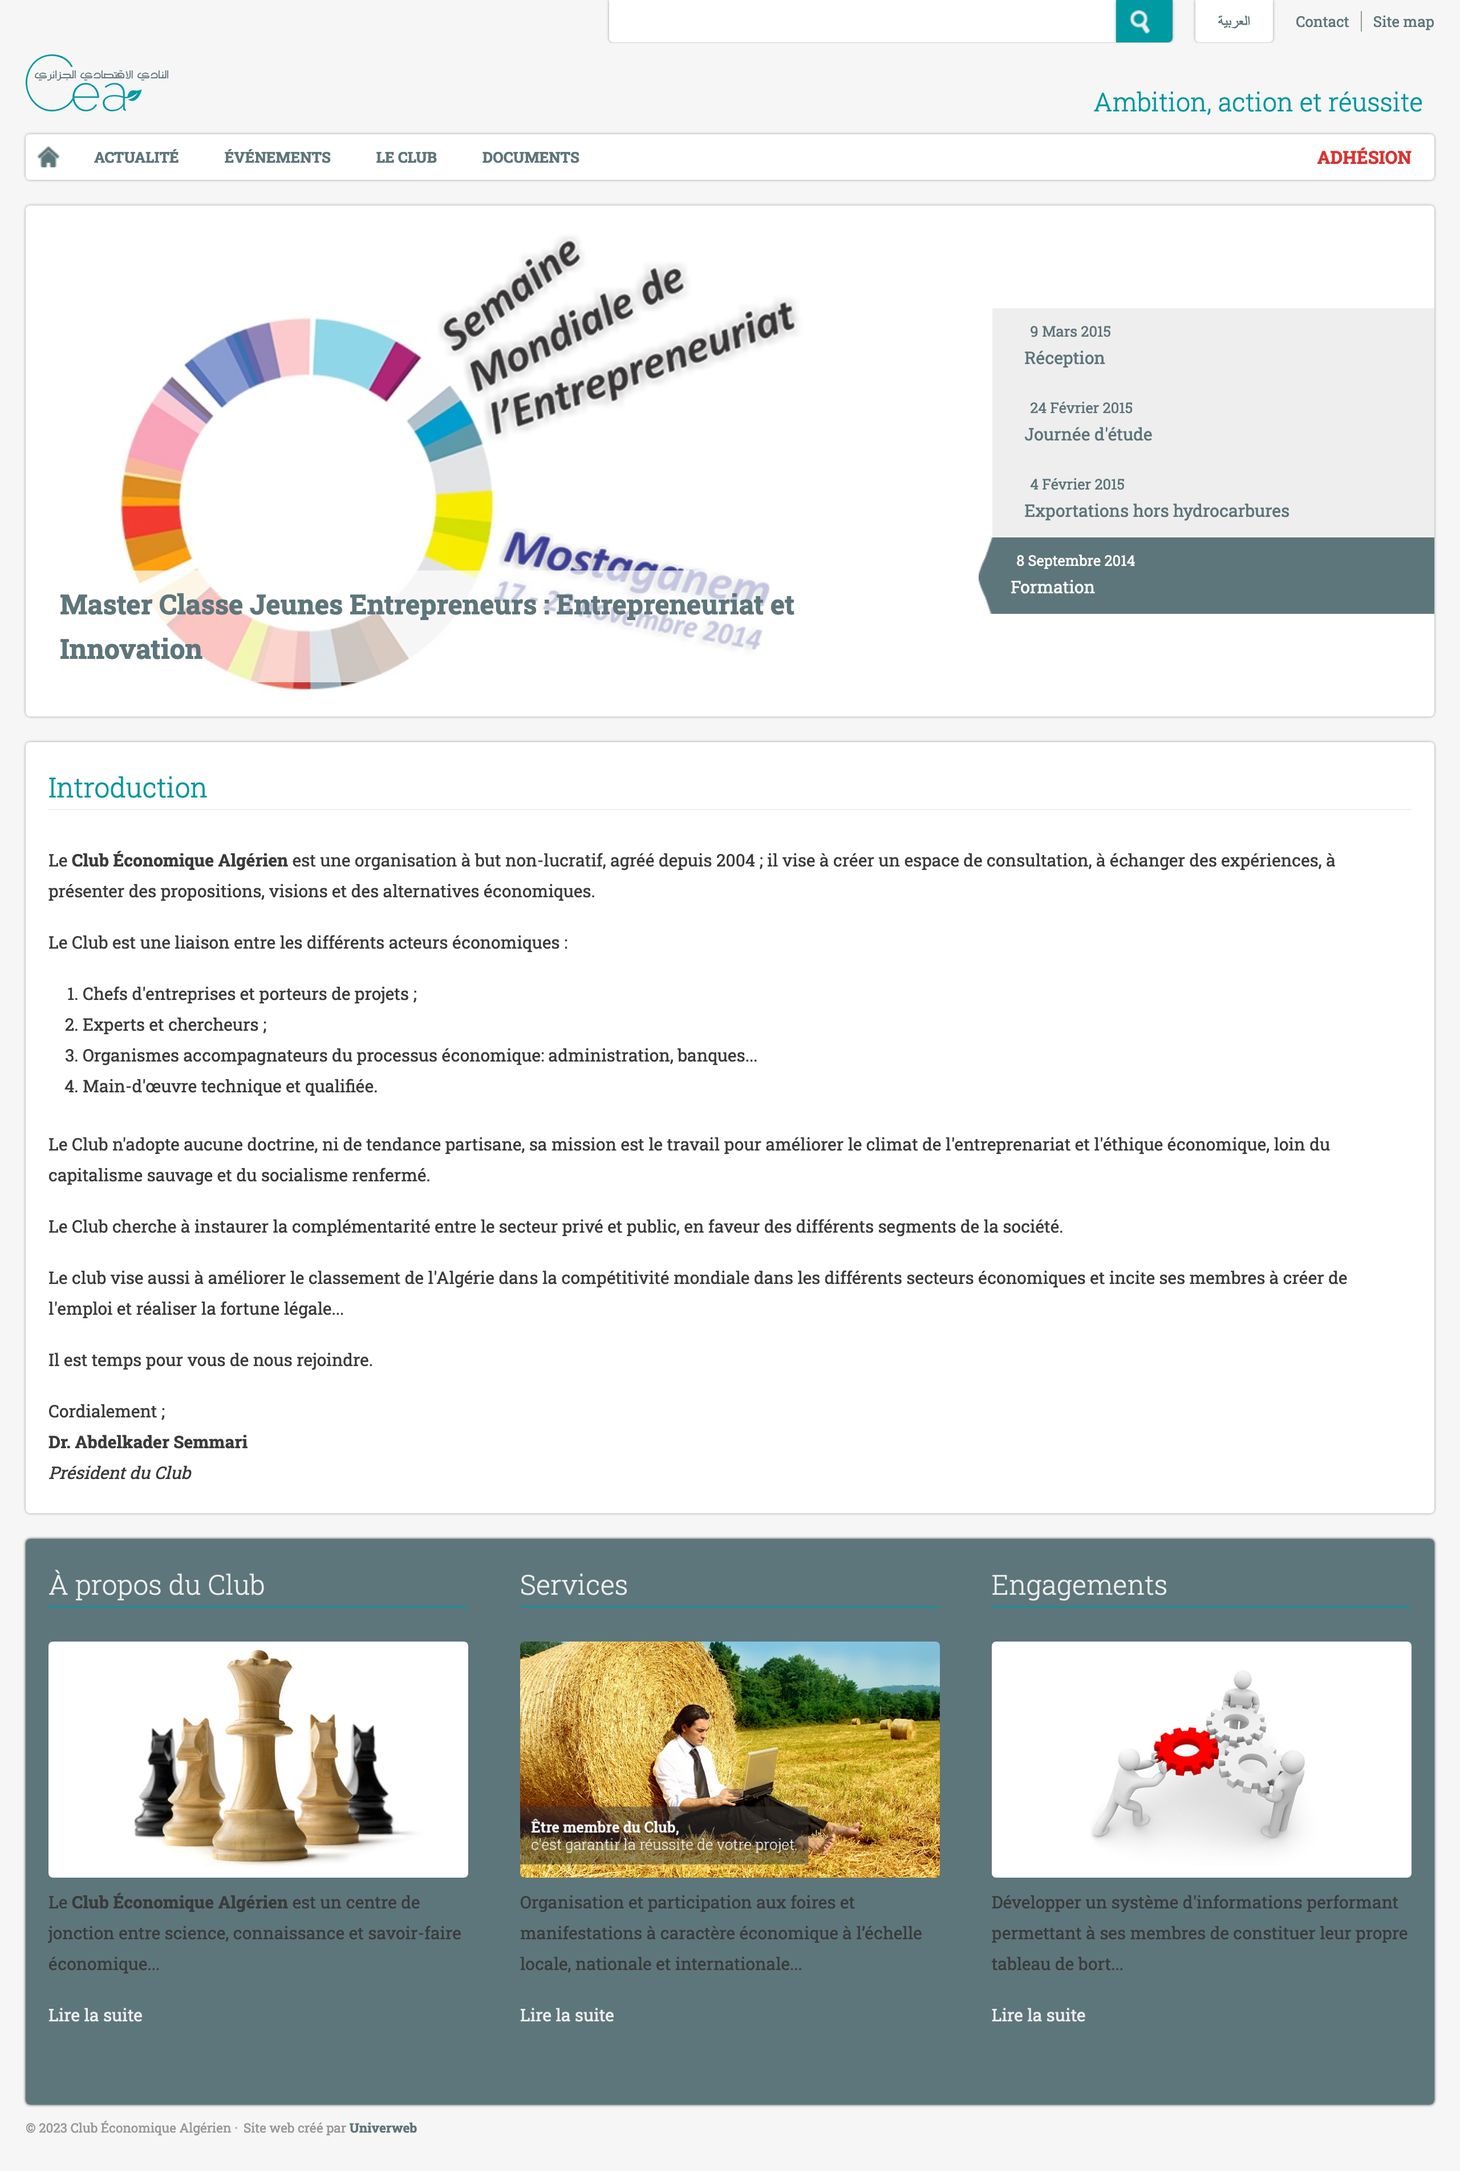 A website overview of Algerian Economic Club